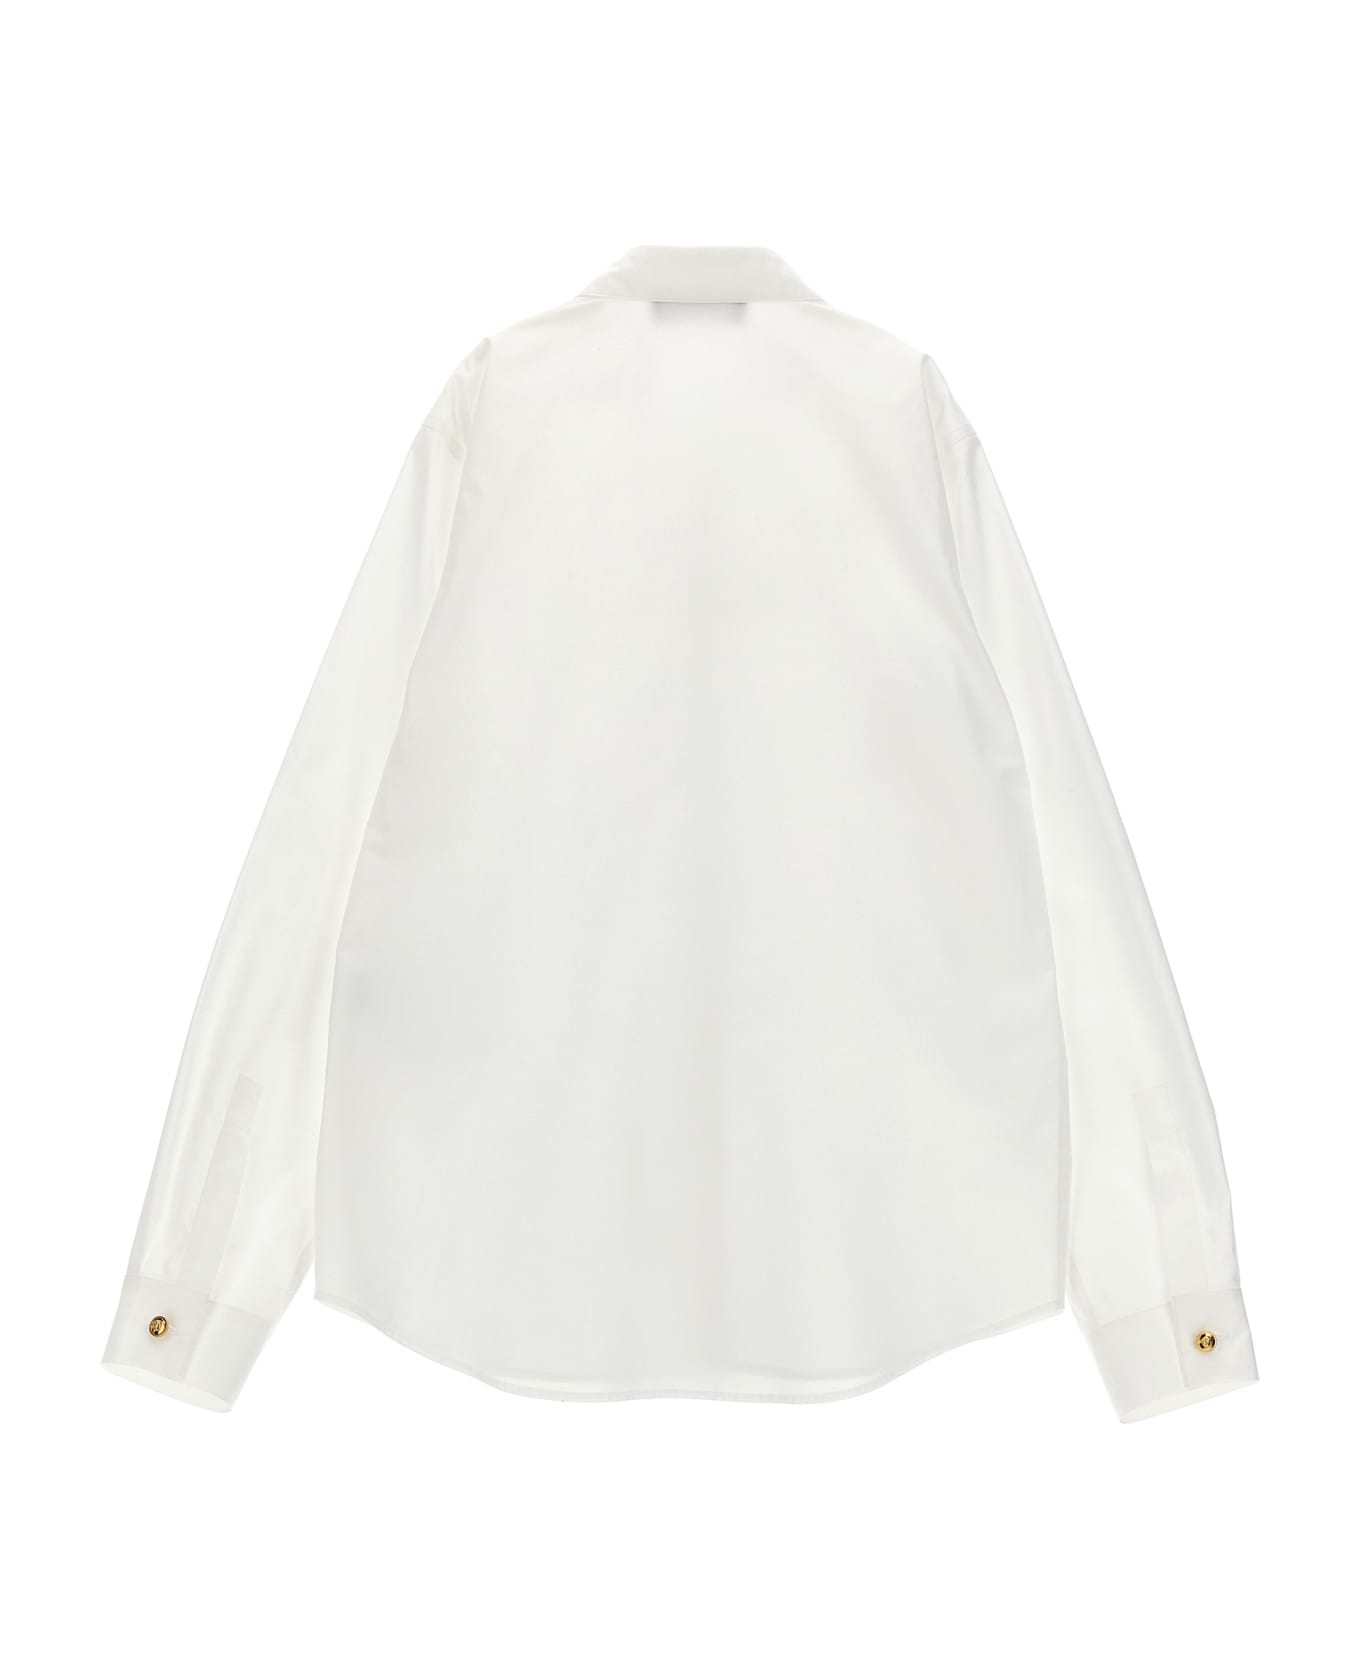 Versace 'medusa' Shirt - White シャツ